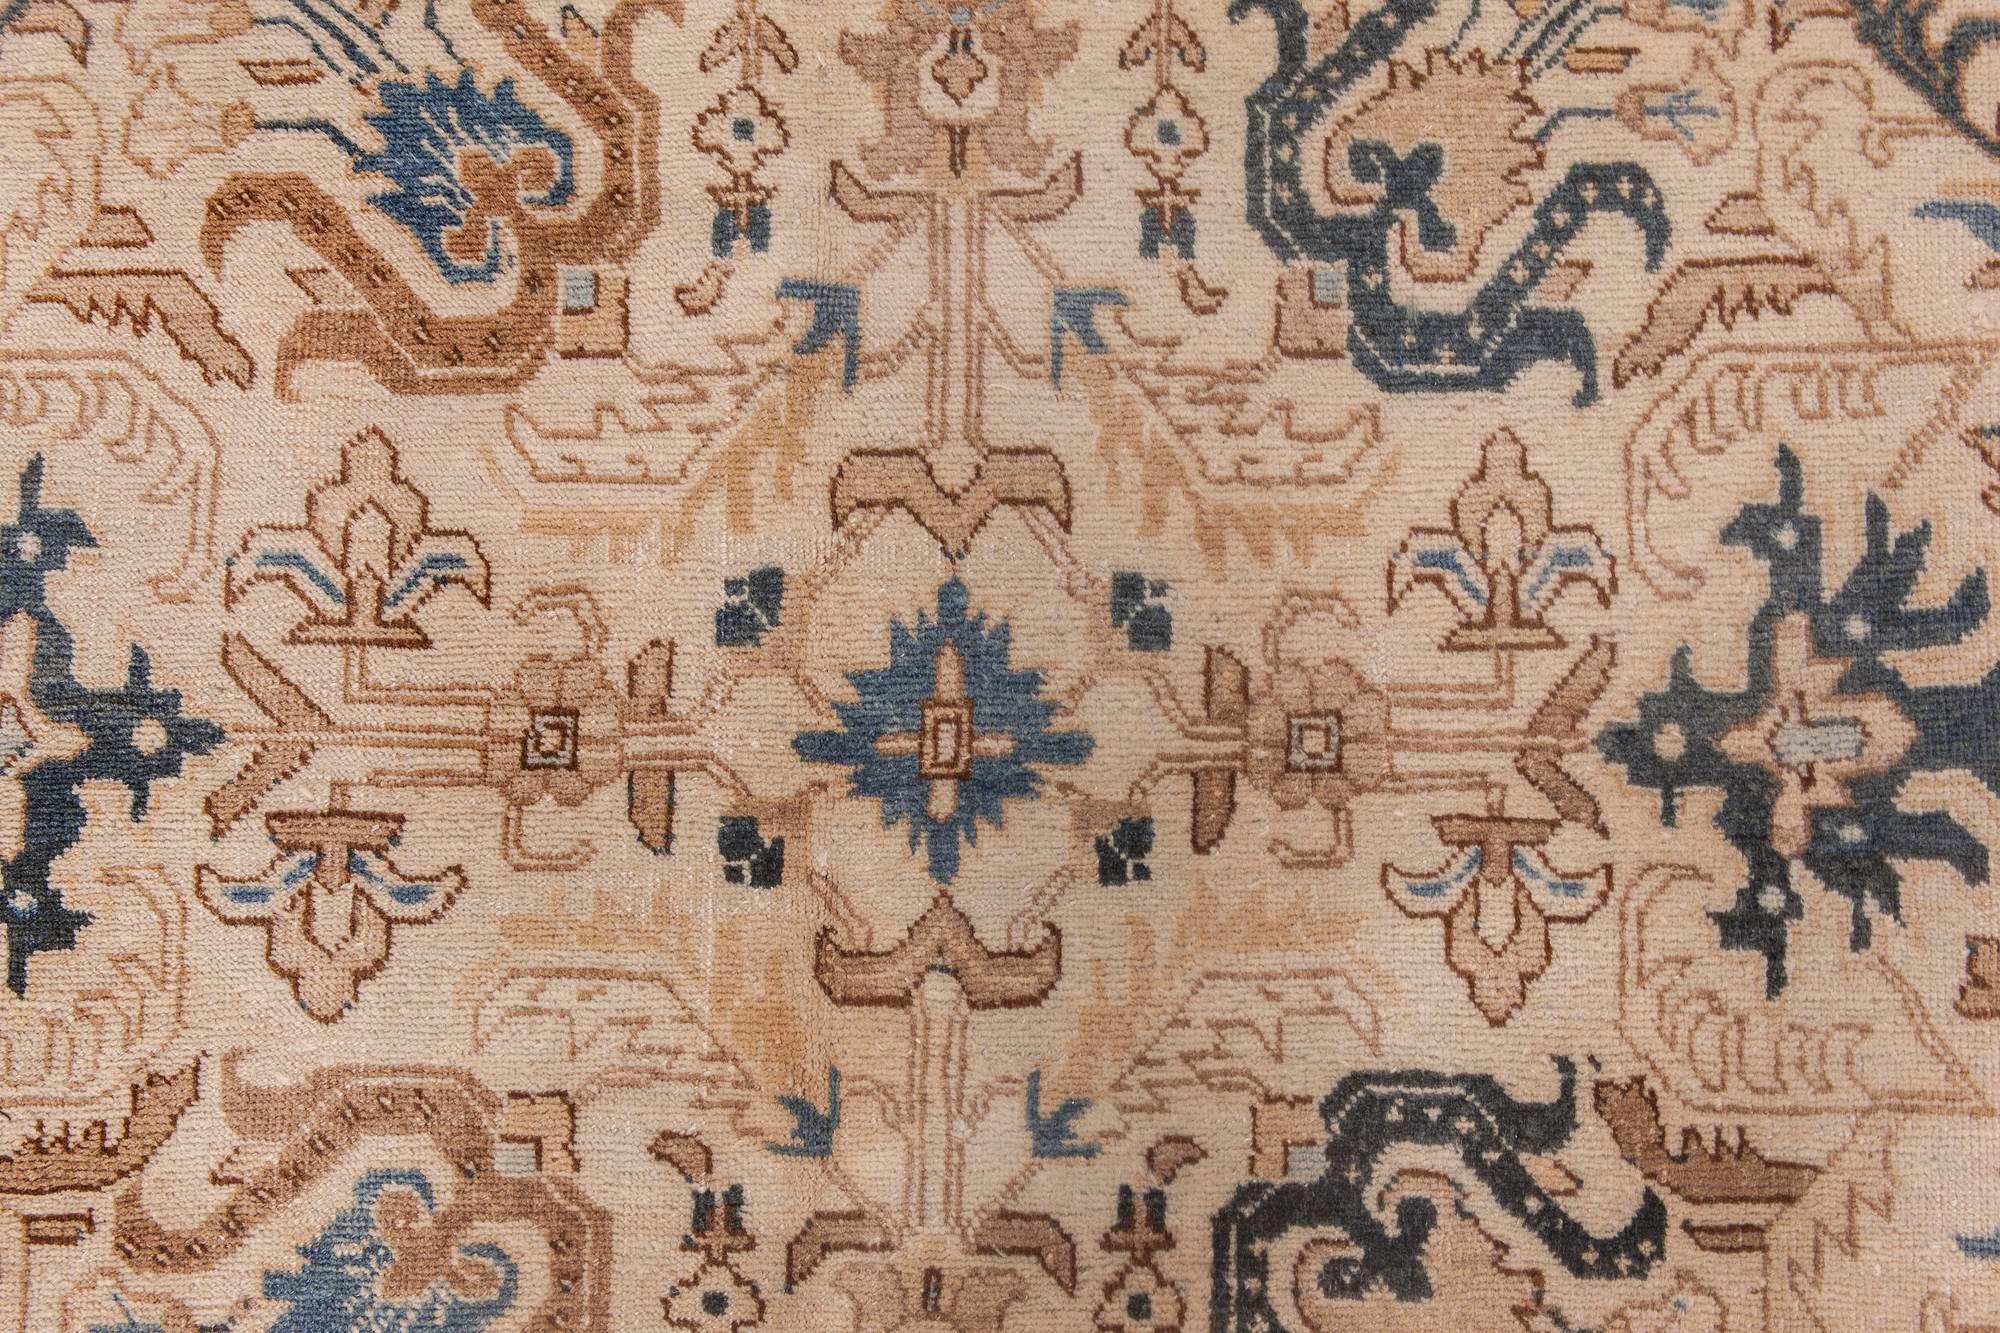 Antique floral Persian Kirman handmade wool rug
Size: 6'10